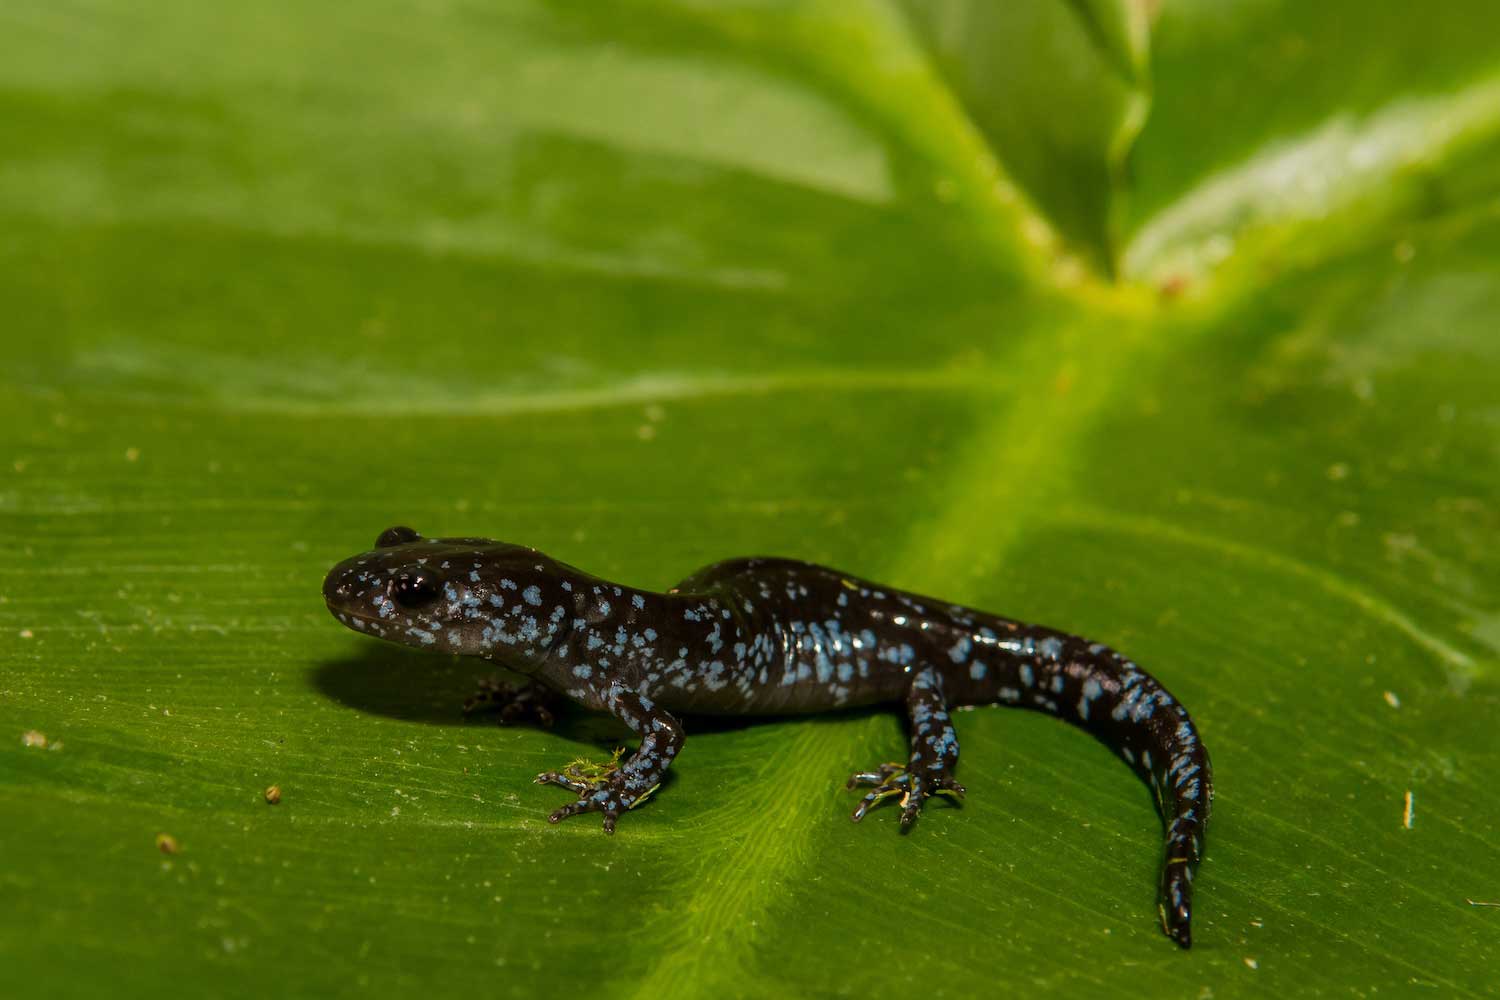 A blue-spotted salamander on a leaf.